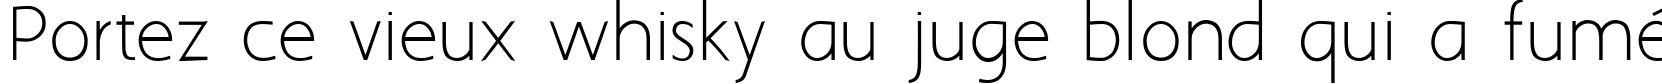 Пример написания шрифтом Aaargh Normal текста на французском